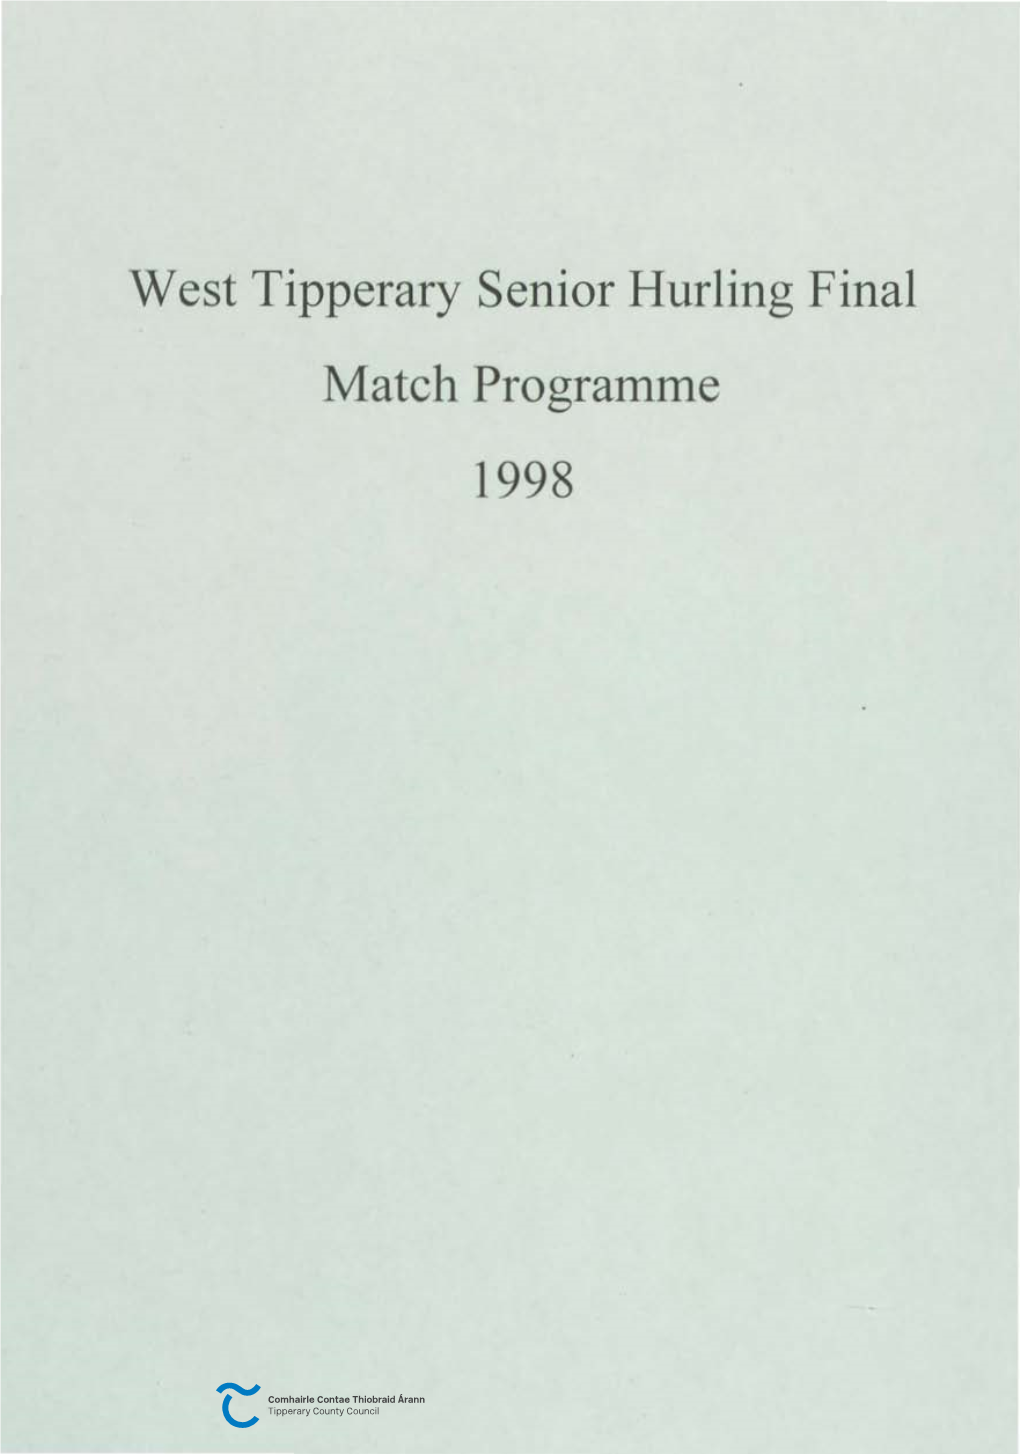 West Tipperary Senior Hurling Final Match Programme 1998 + Clrnchc Ccannaj8 Lomana CAREW INVESTMENTS Senior Hurling Championship Final CLONOULTY/ROSSMORE V